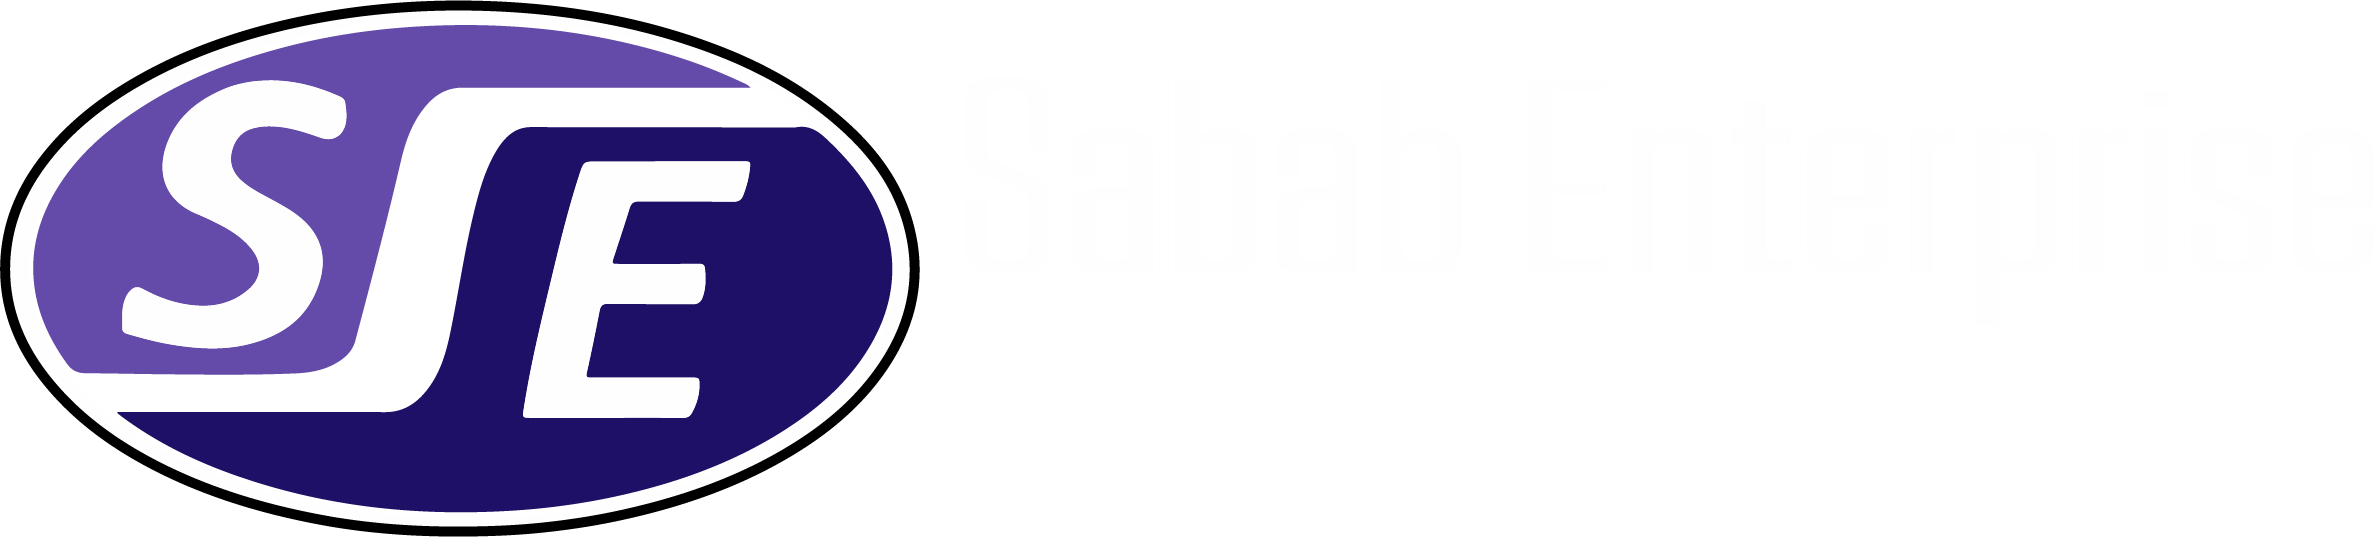 Sabab Enterprise Ltd